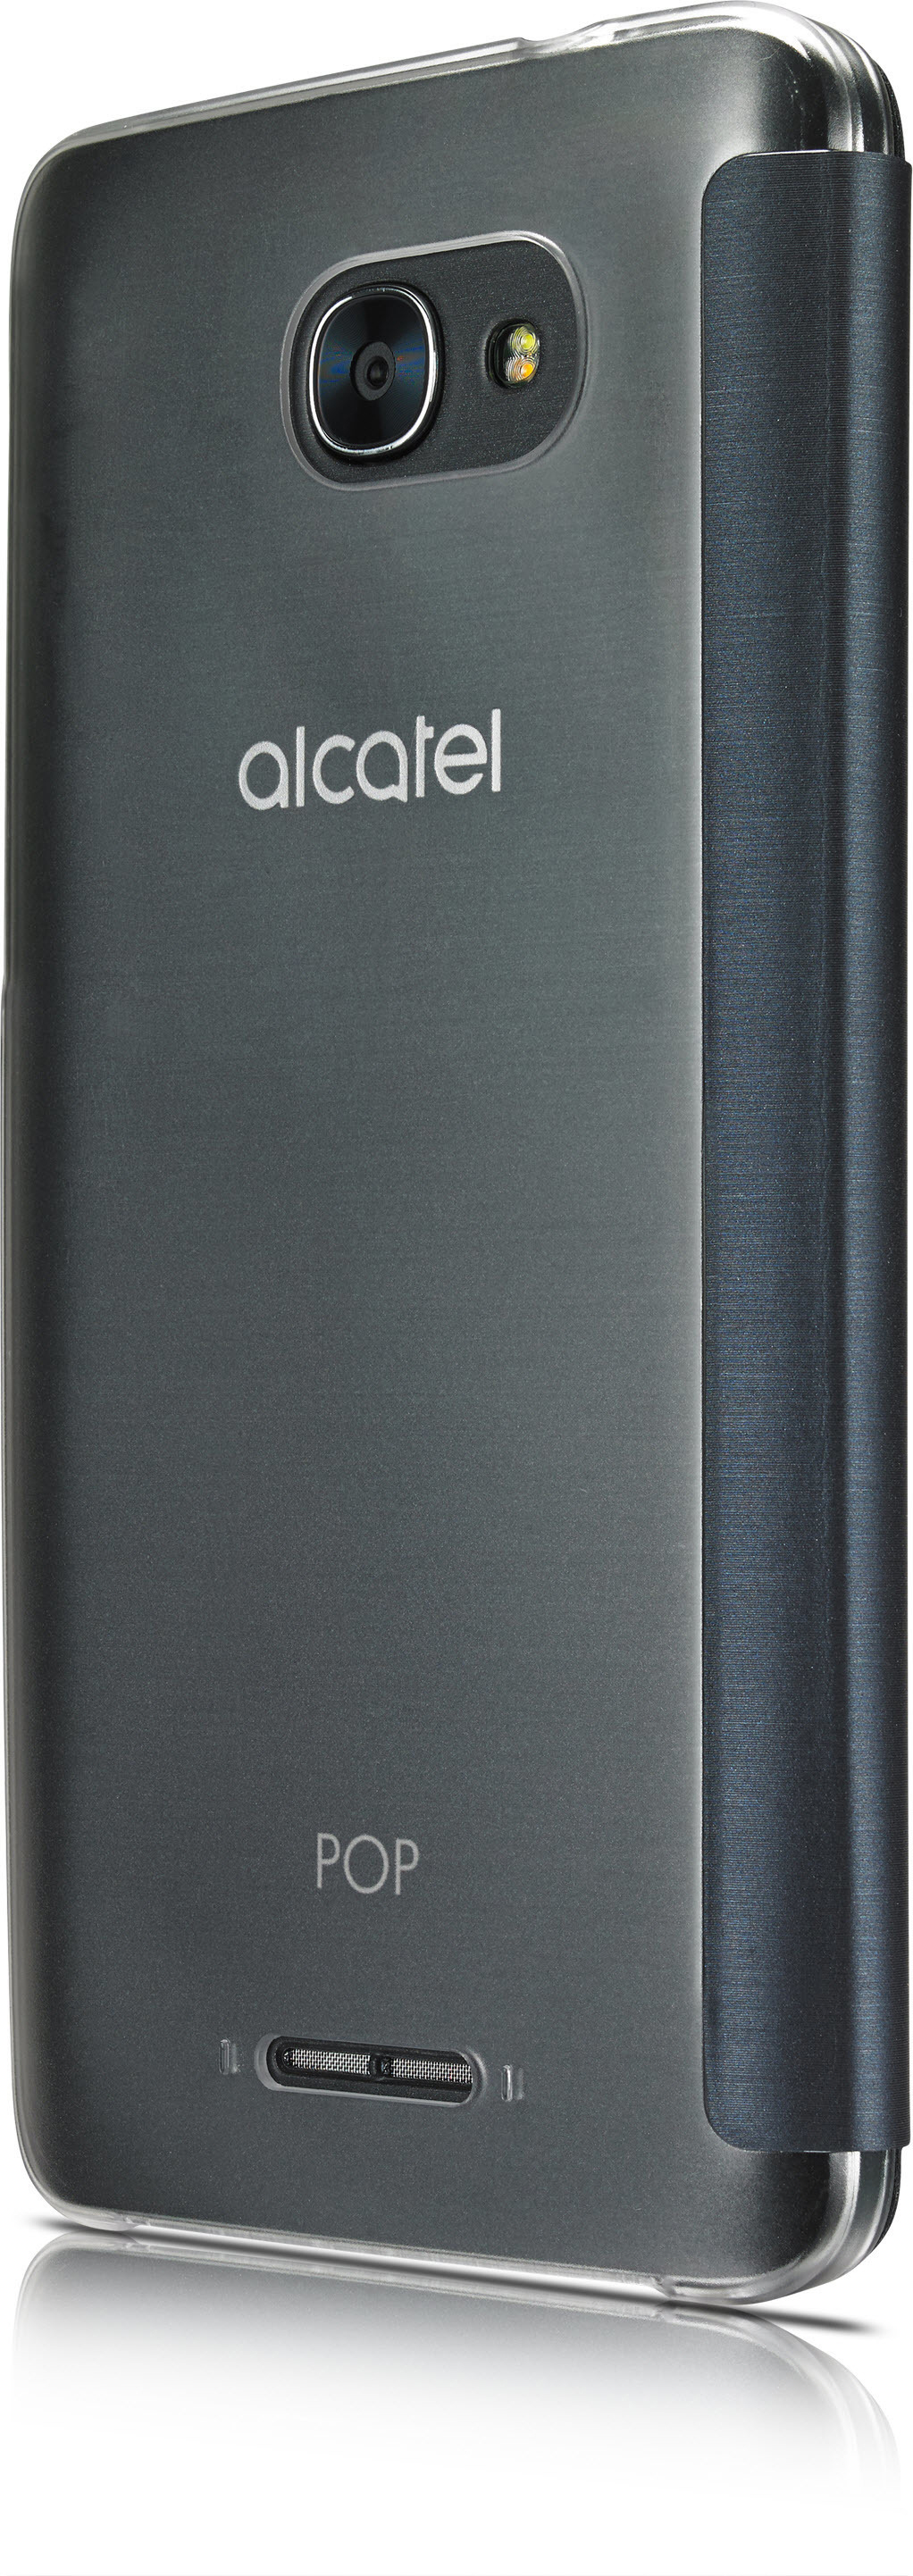 POP ALCATEL Bookcover, Grau/Silber 5095, Alcatel, AF5095, 4S,